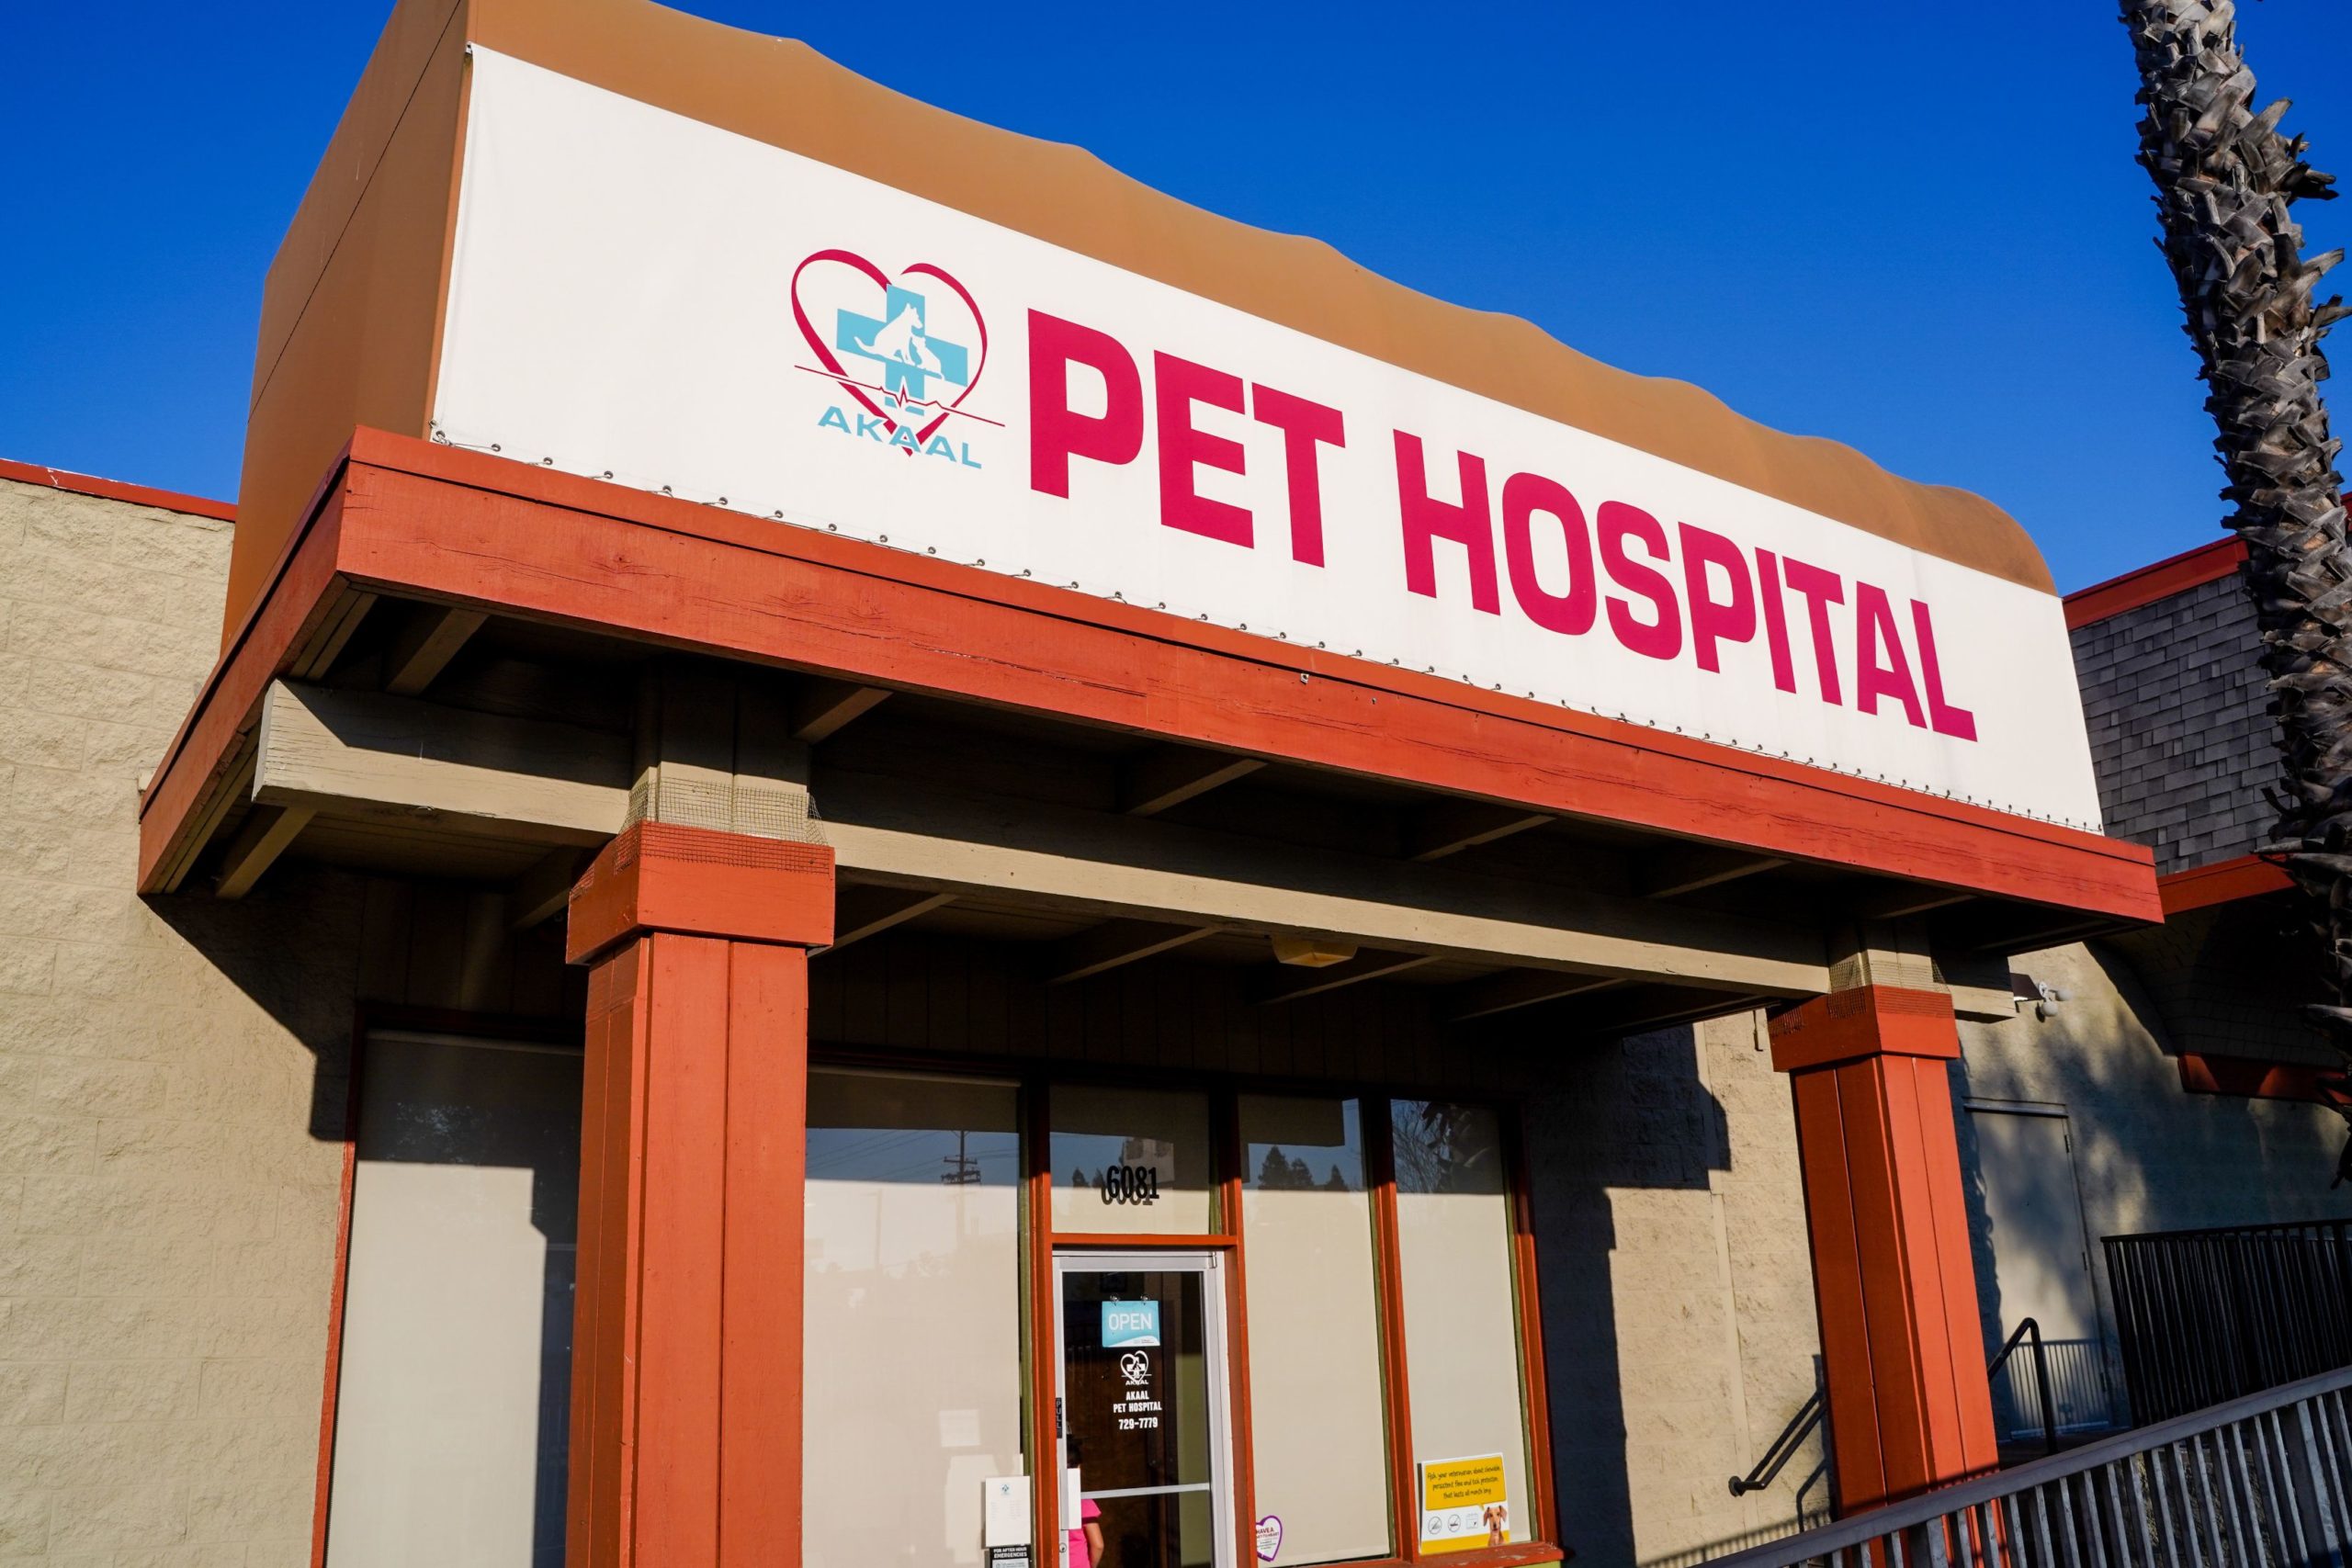 Veterinarian in Citrus Heights, CA 95621 - Akaal Pet Hospital